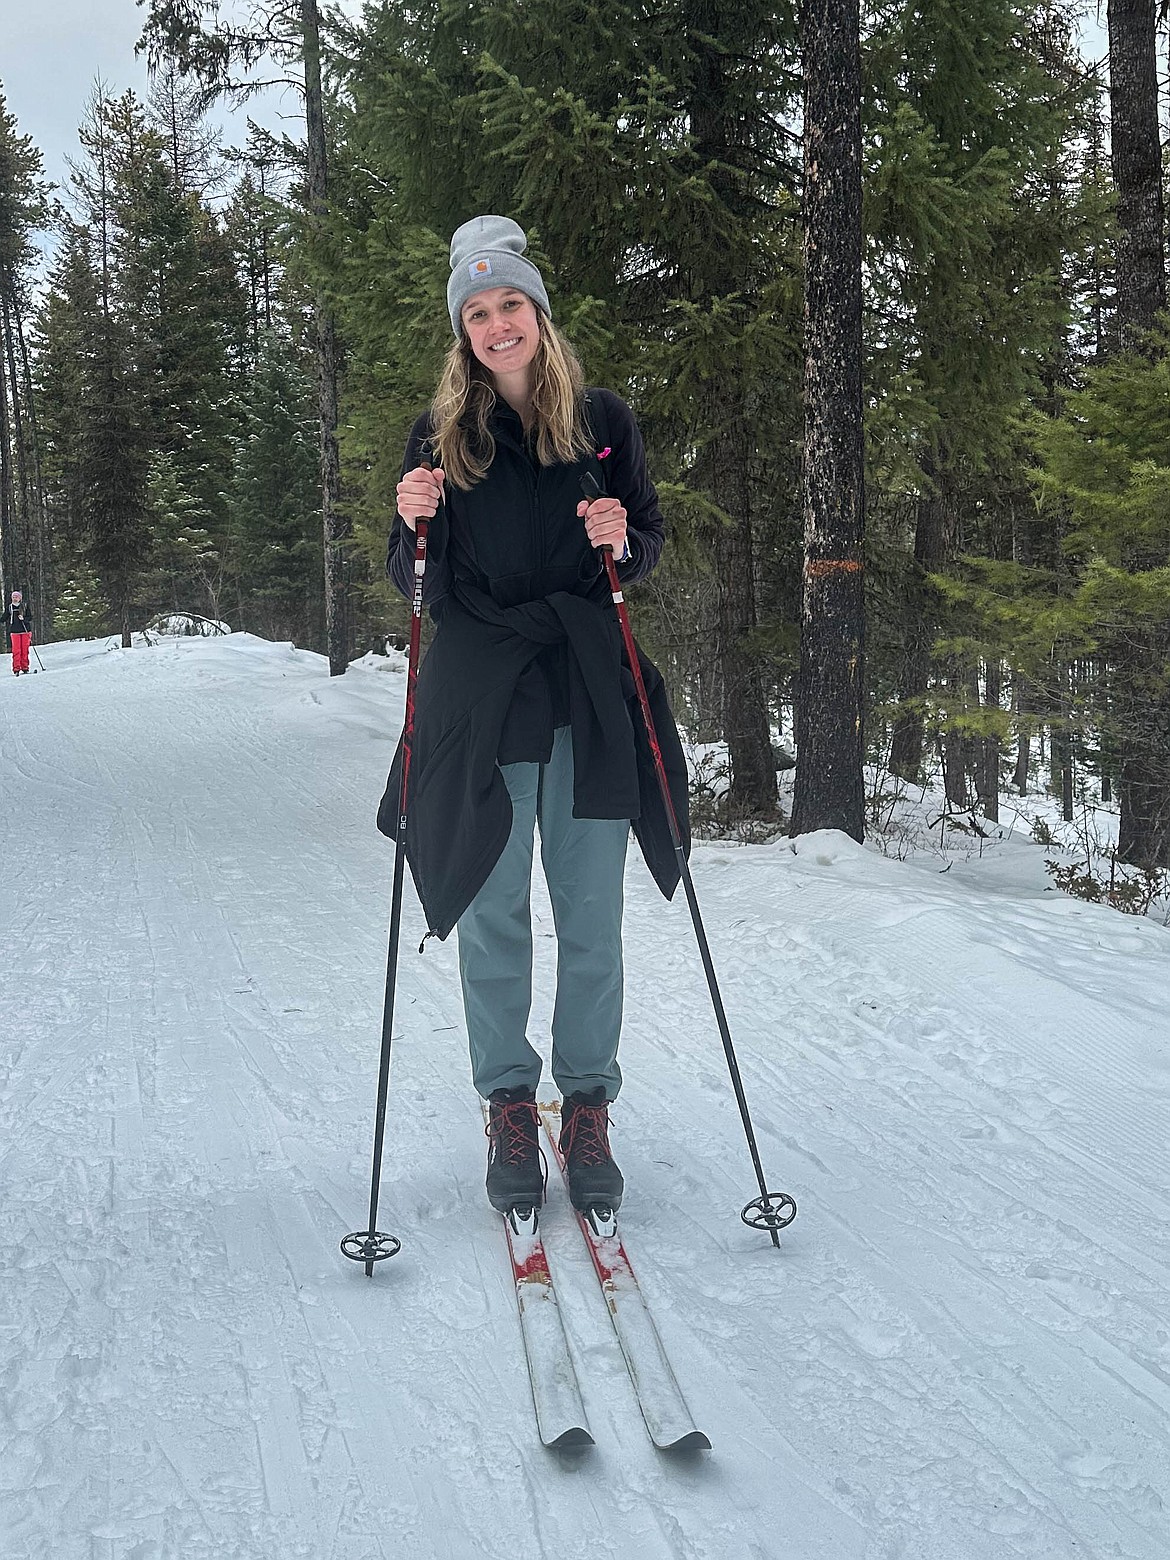 Reporter Kate Heston is seen cross country skiing on Jan. 25, 2023.